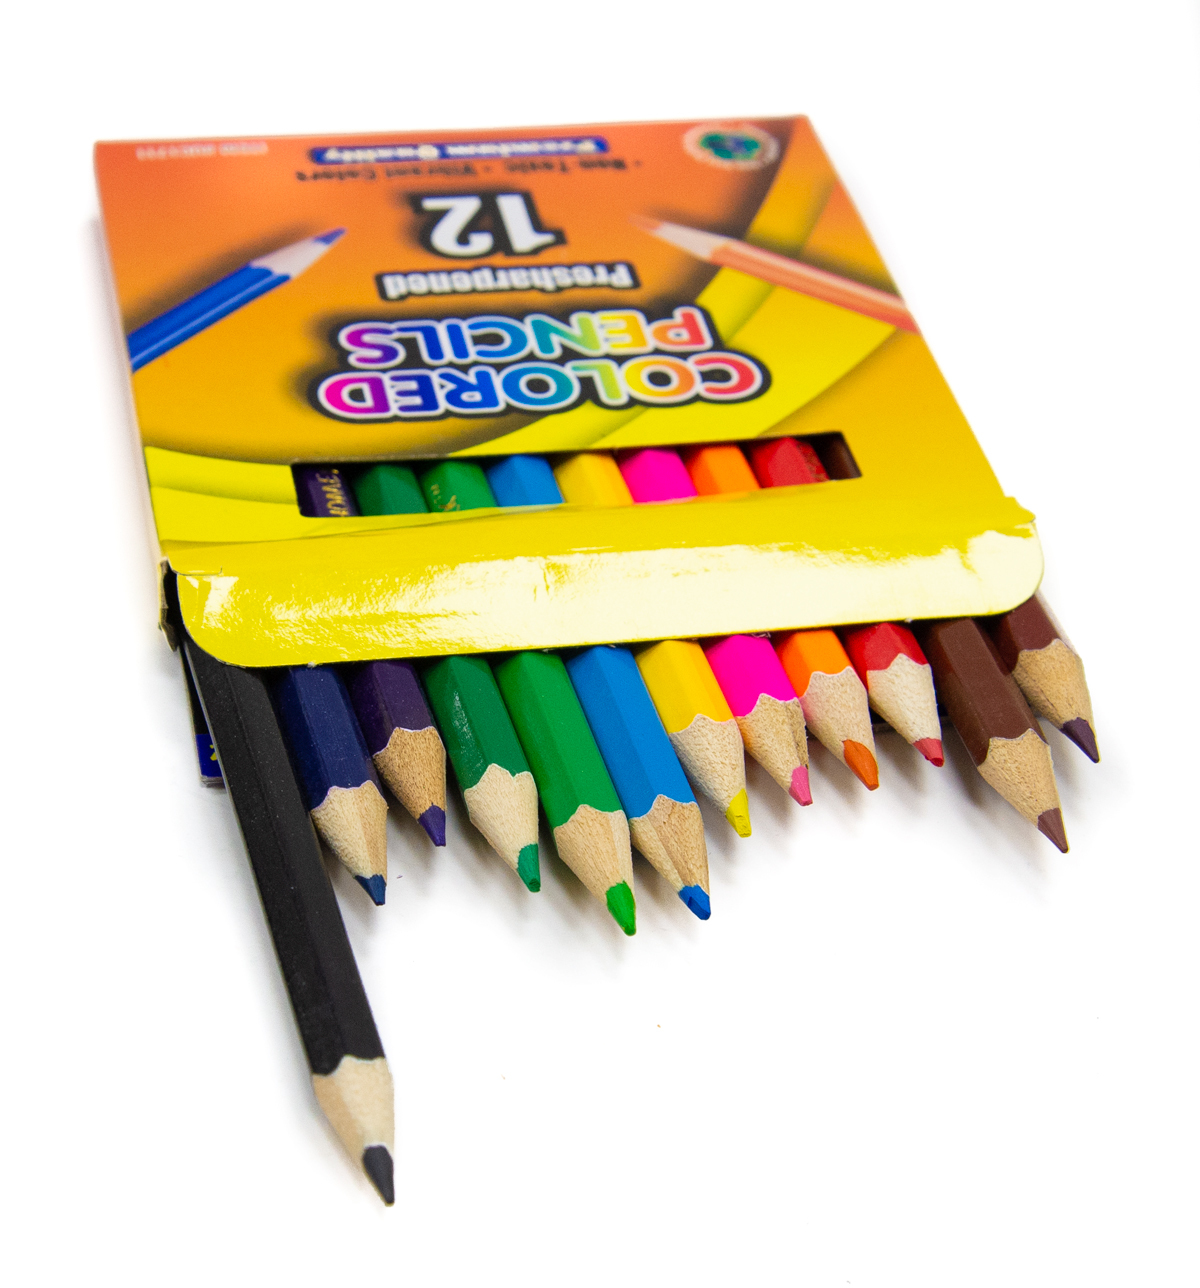 Wholesale Mini Colored Pencils - 12 Pack, Pre-Sharpened - DollarDays